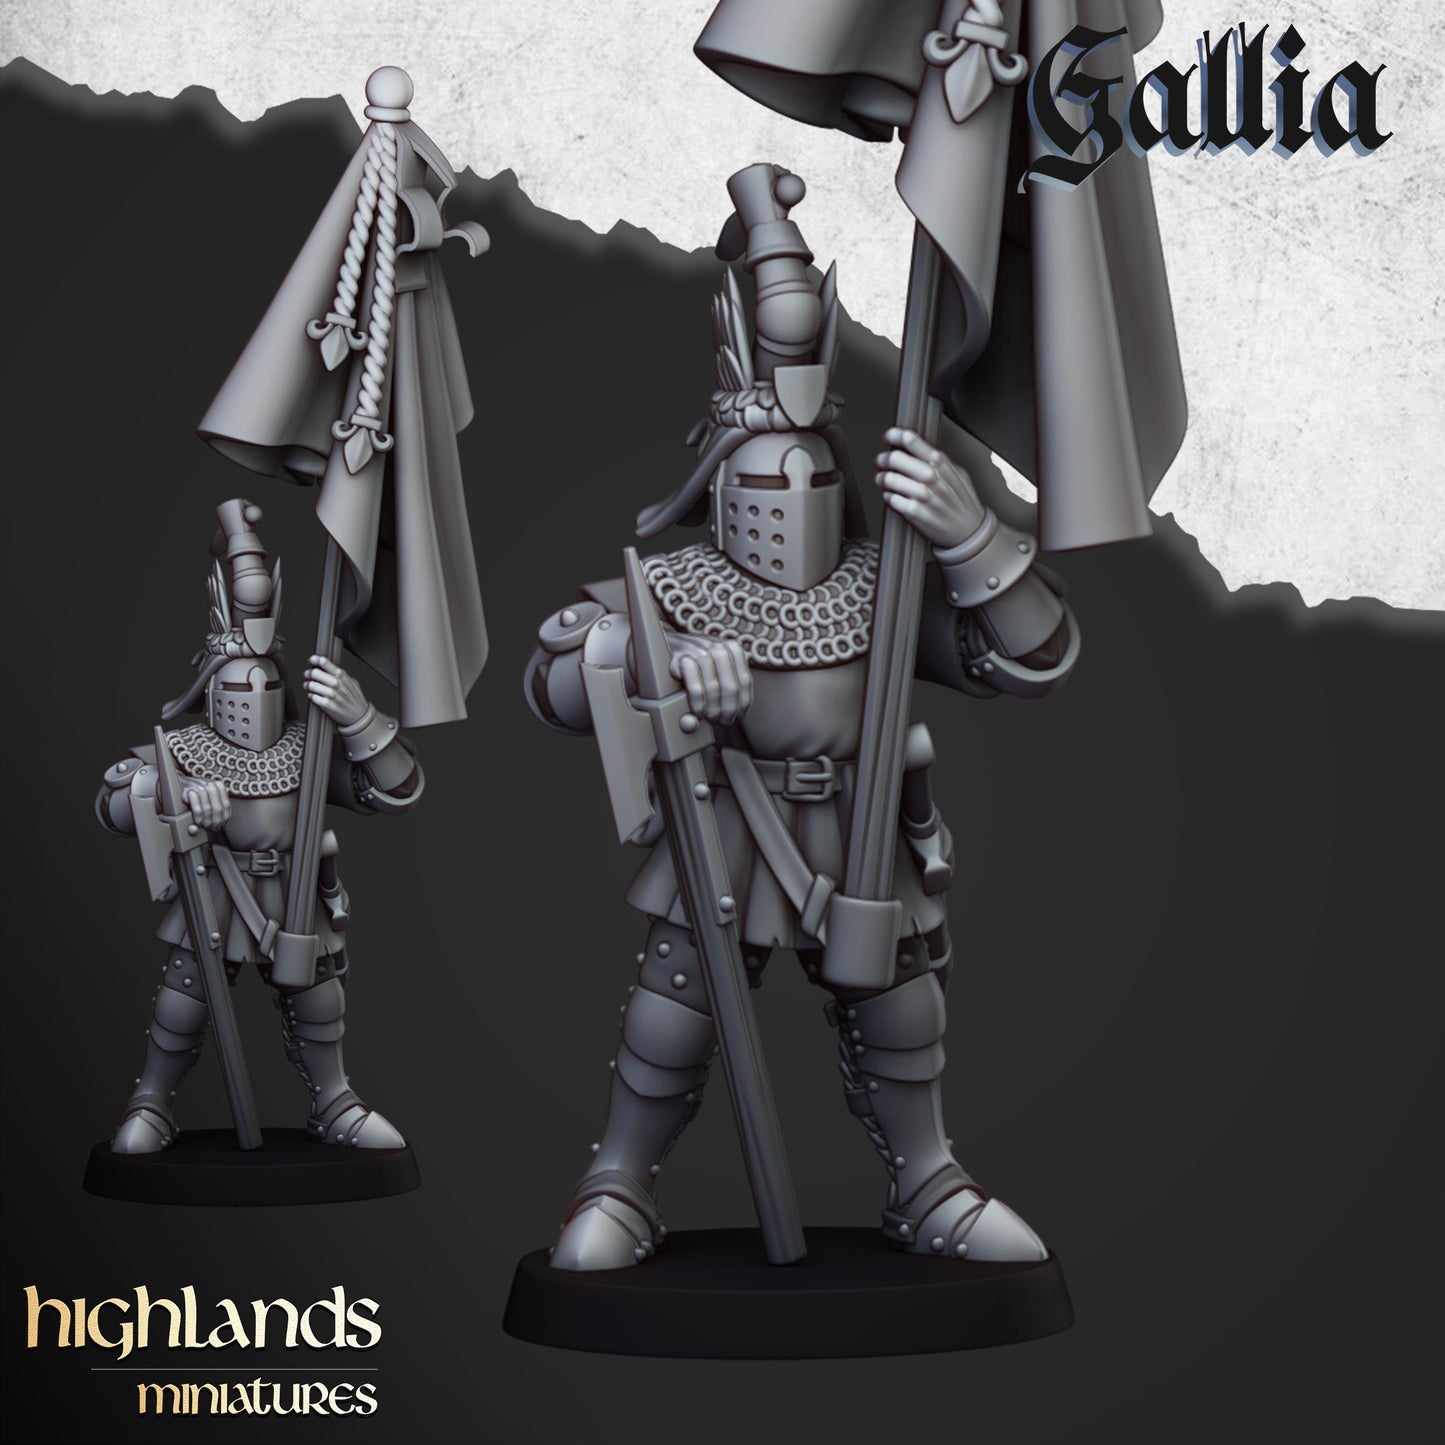 Knights of Gallia on foot / CG